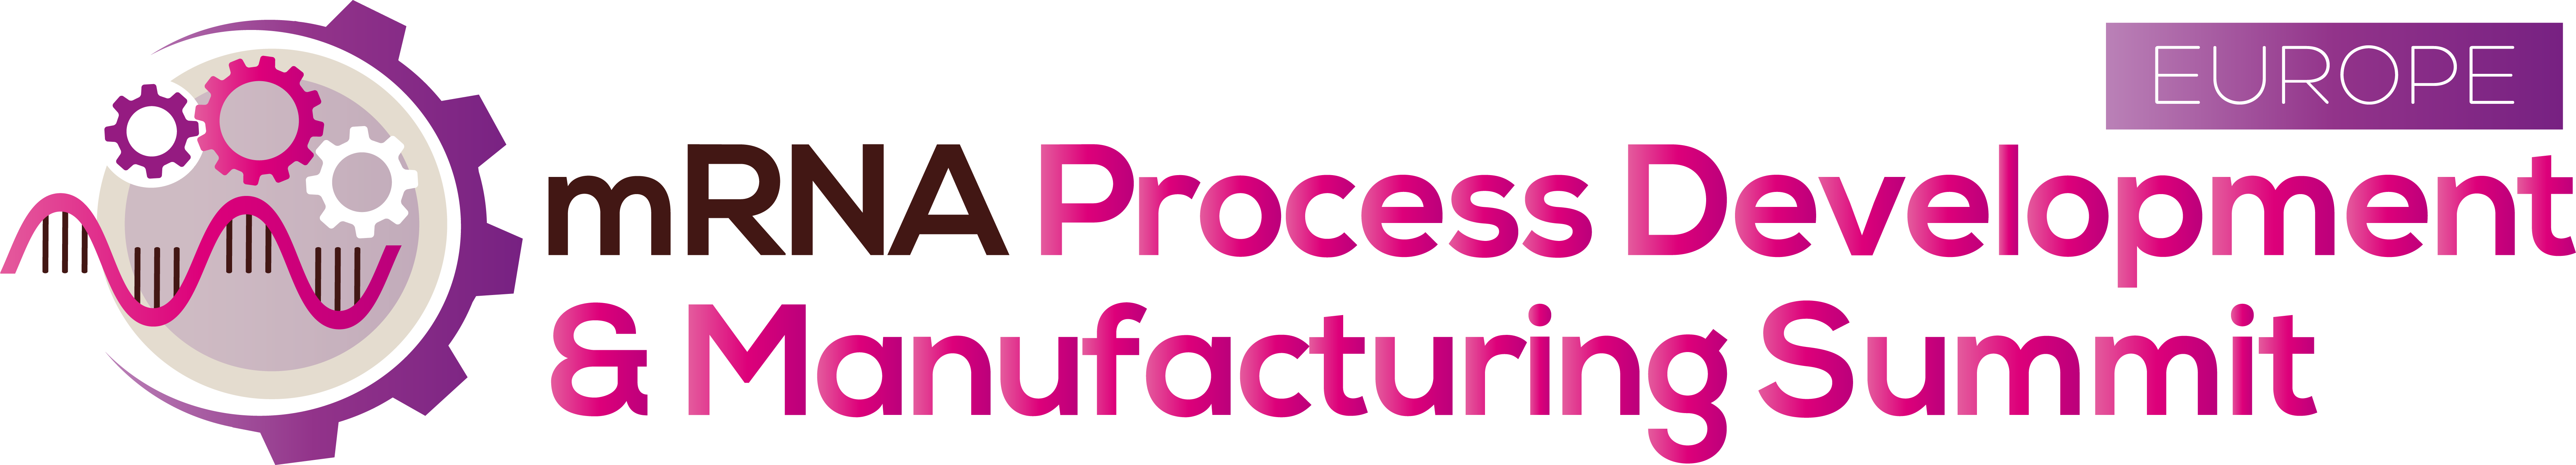 mRNA Process Development & Manufacturing Summit Europe Logo